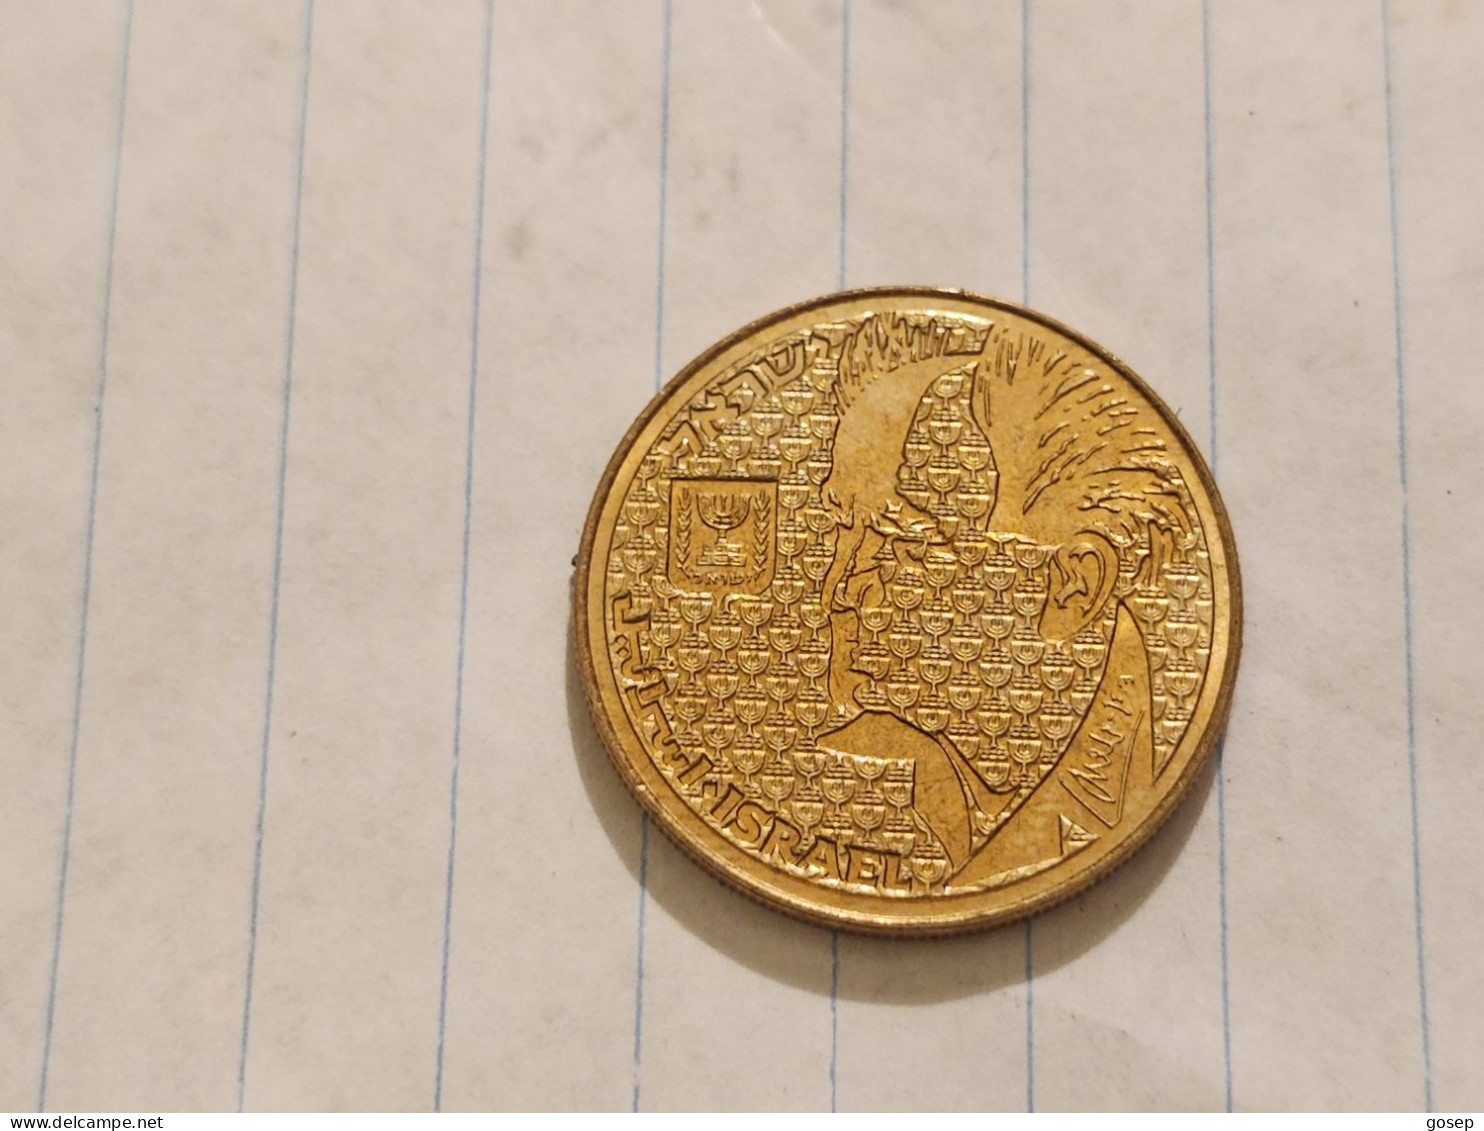 Israel-Coins-JEWISH LEDAERS(SHEKEL1985-1981)50 SHEQELIM-36a-(1985)-(37)תשמ"ה(Special Domestic Currency-ben Gurion)copper - Israel